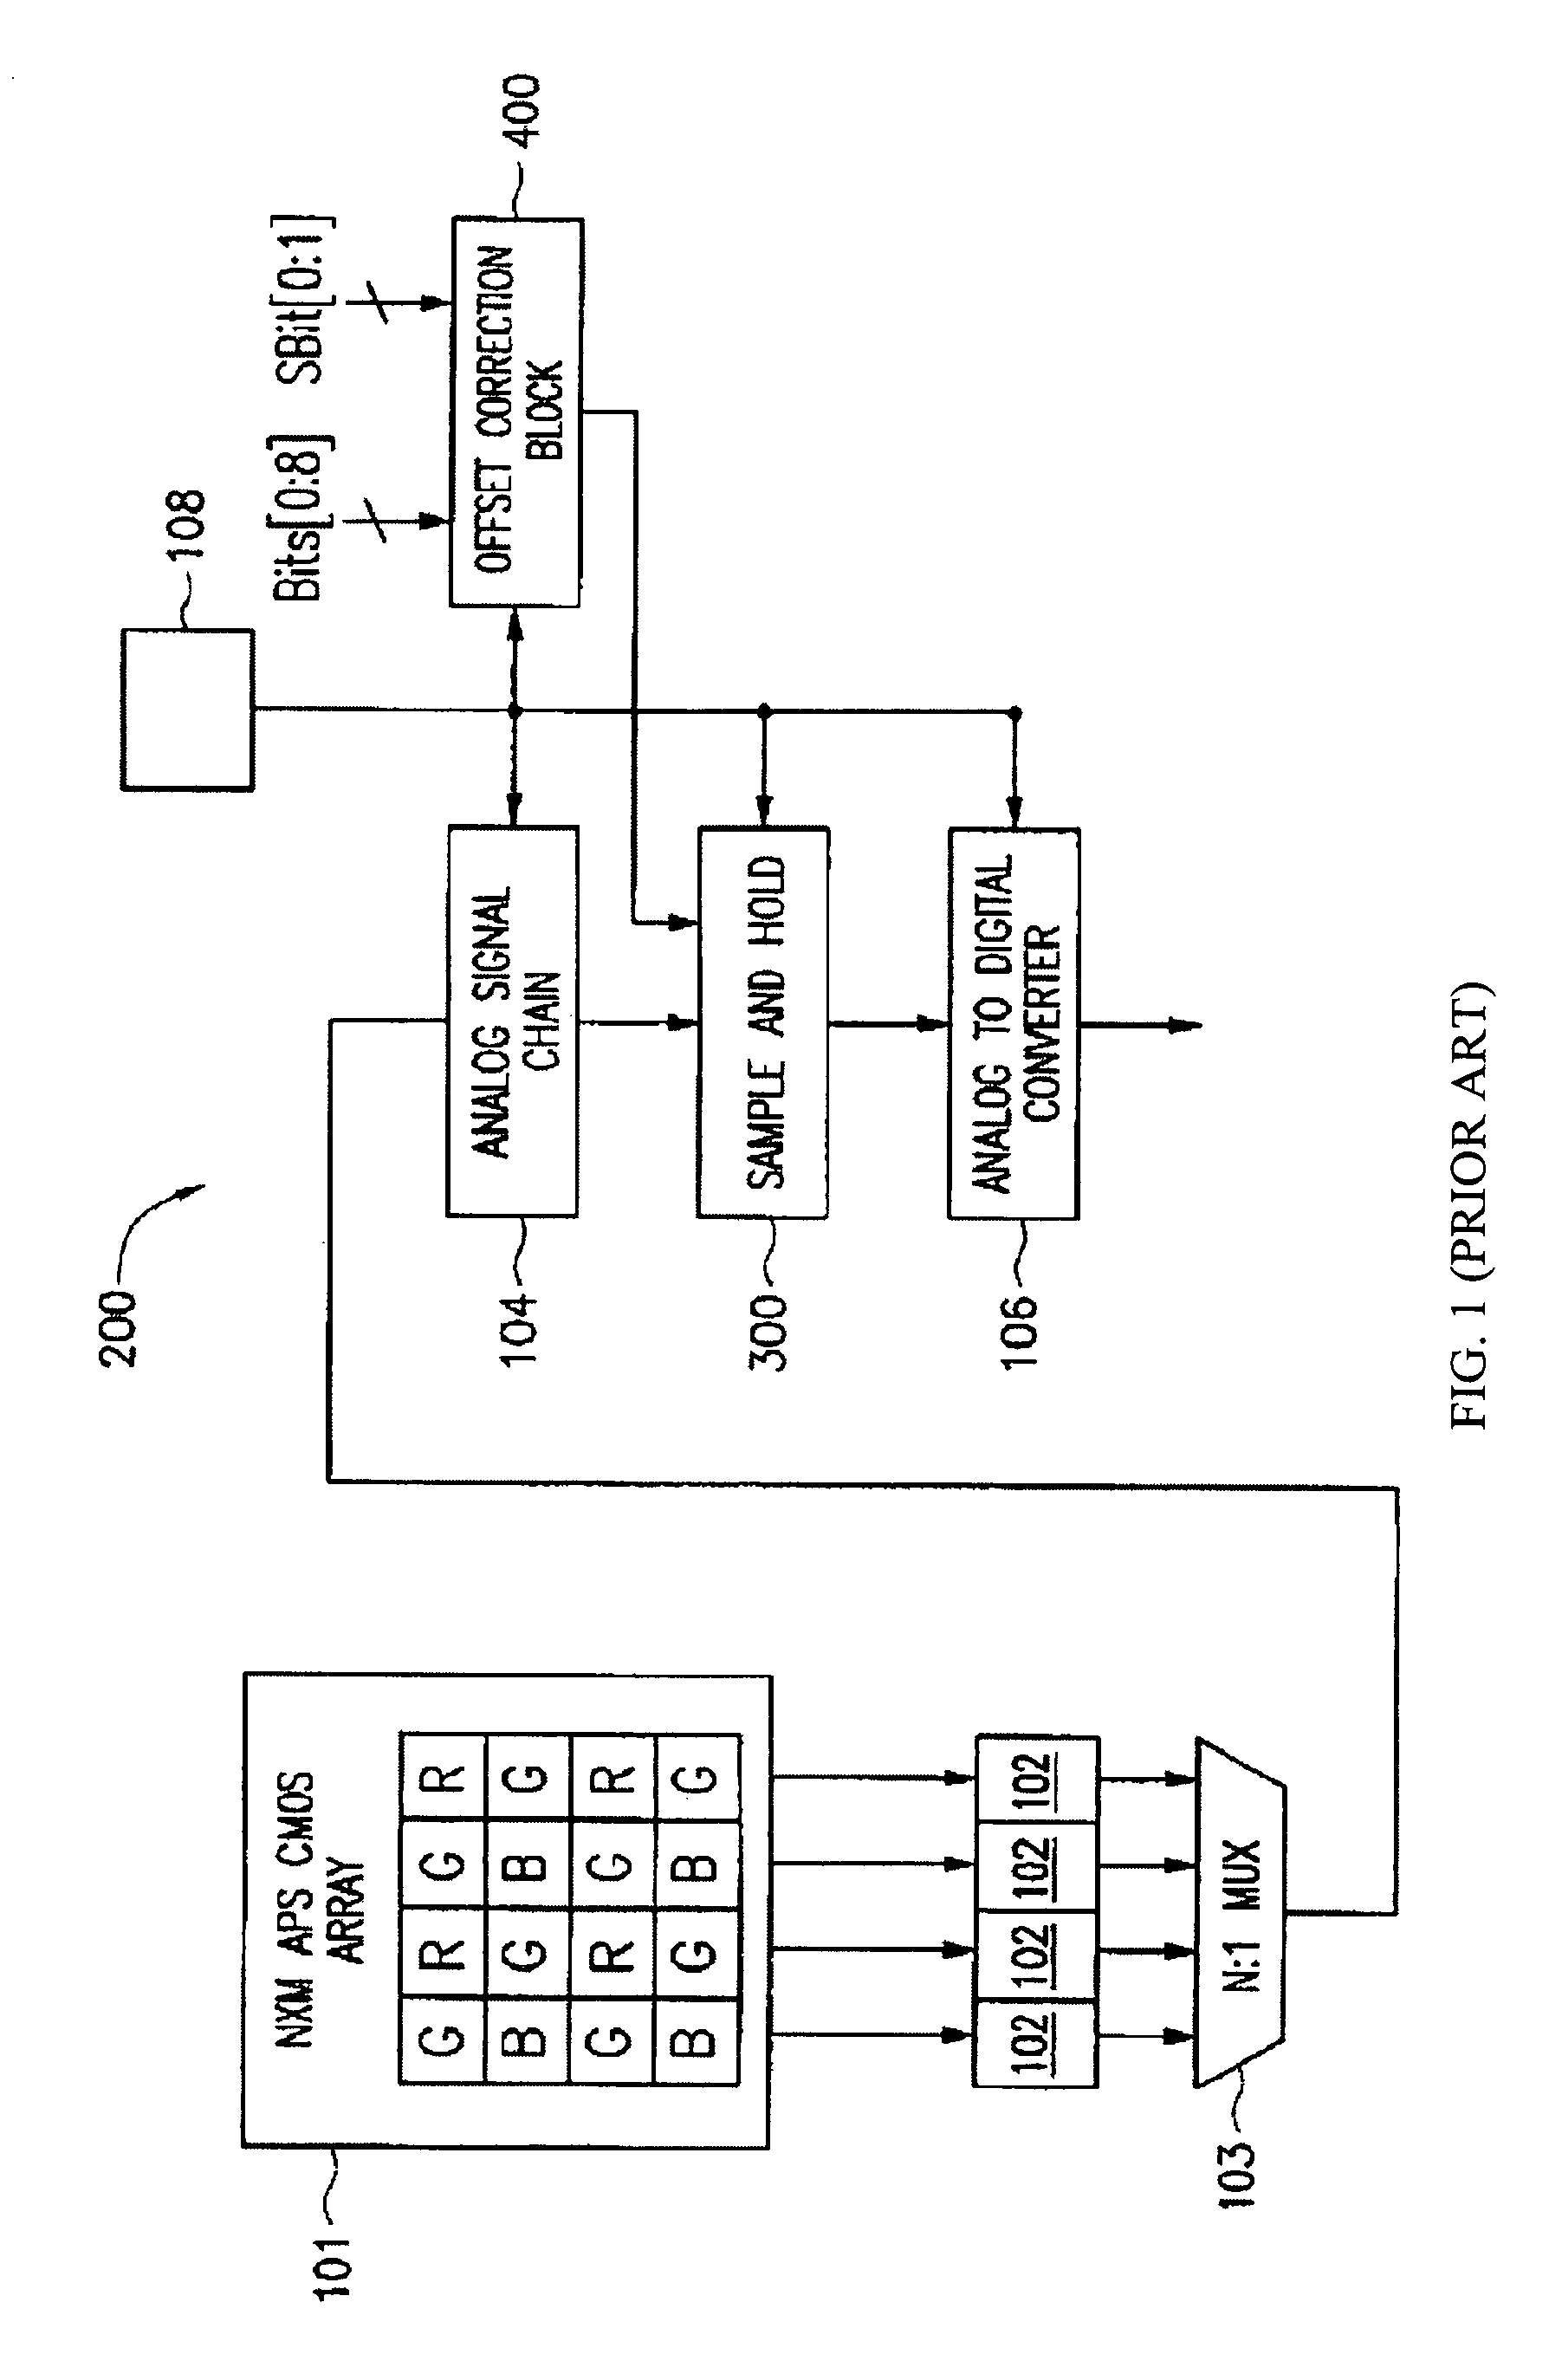 Apparatus and method for stabilizing image sensor black level